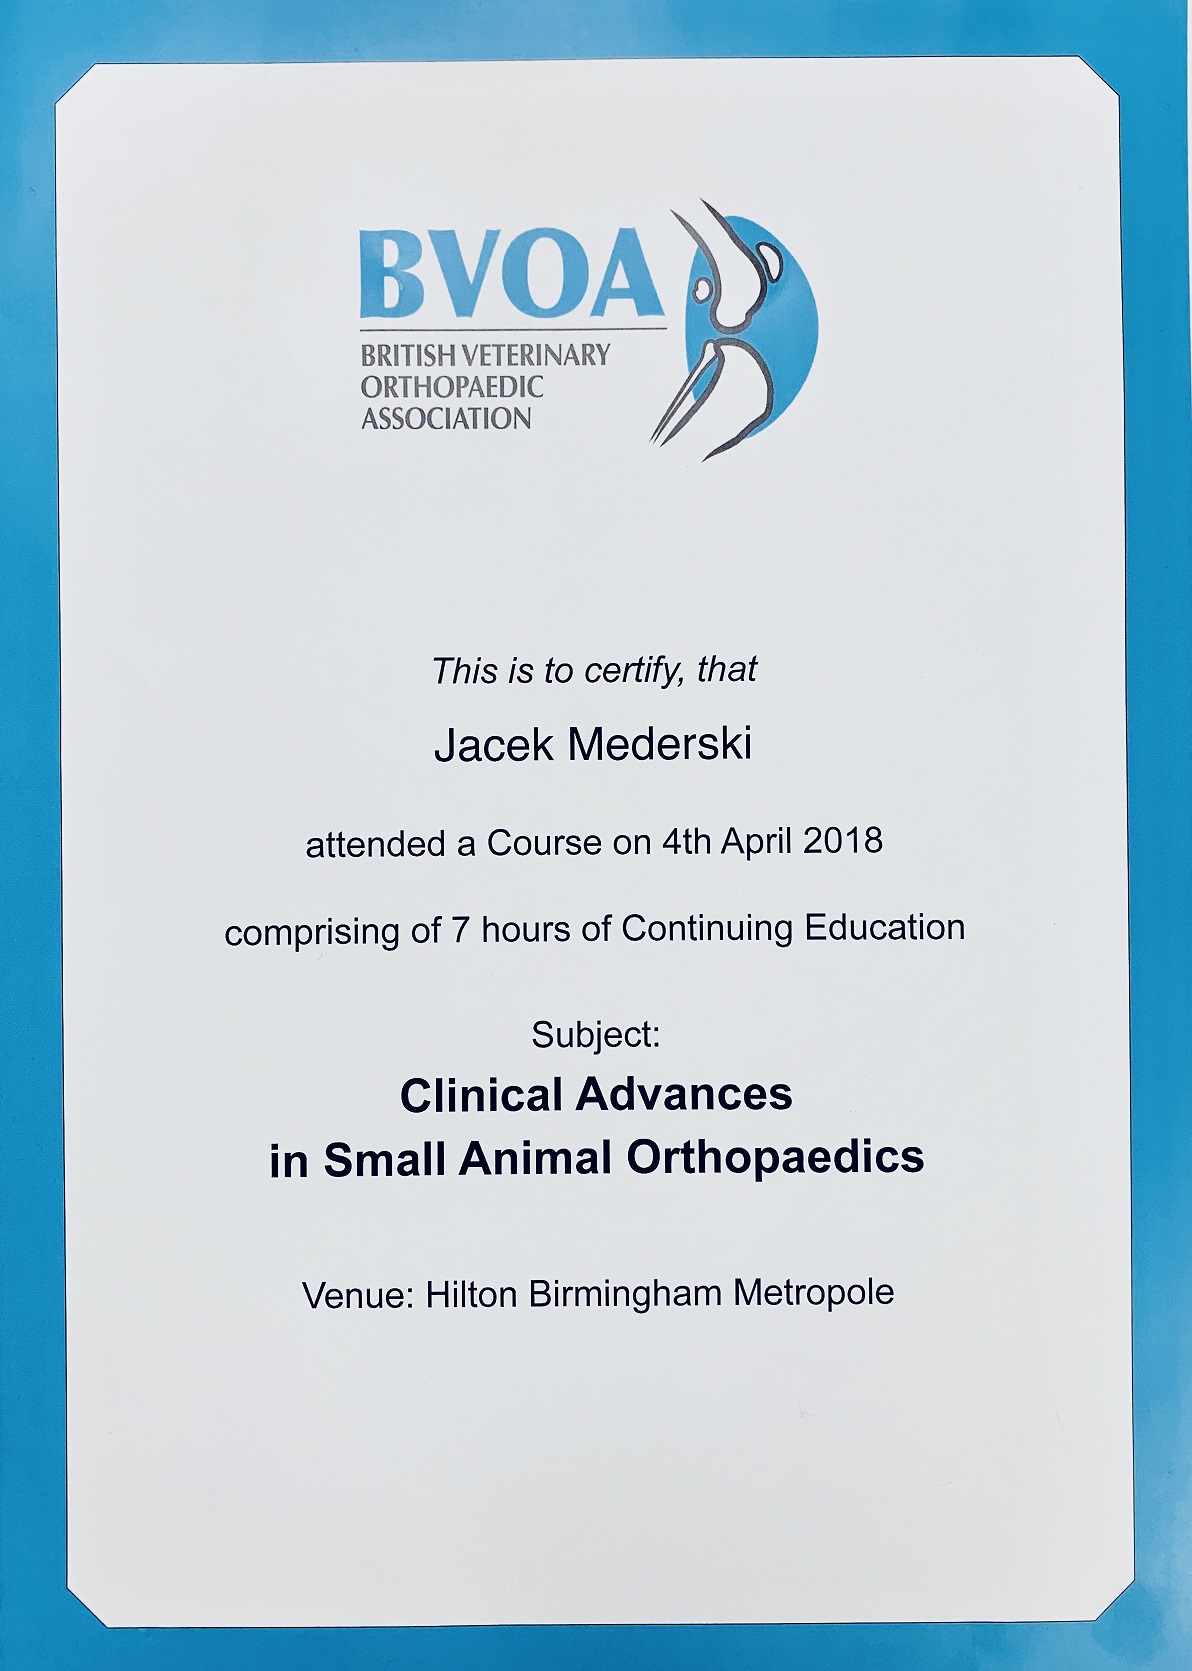 BVOA Clinical Advances in Small Animal Orthopaedics-Birmingham